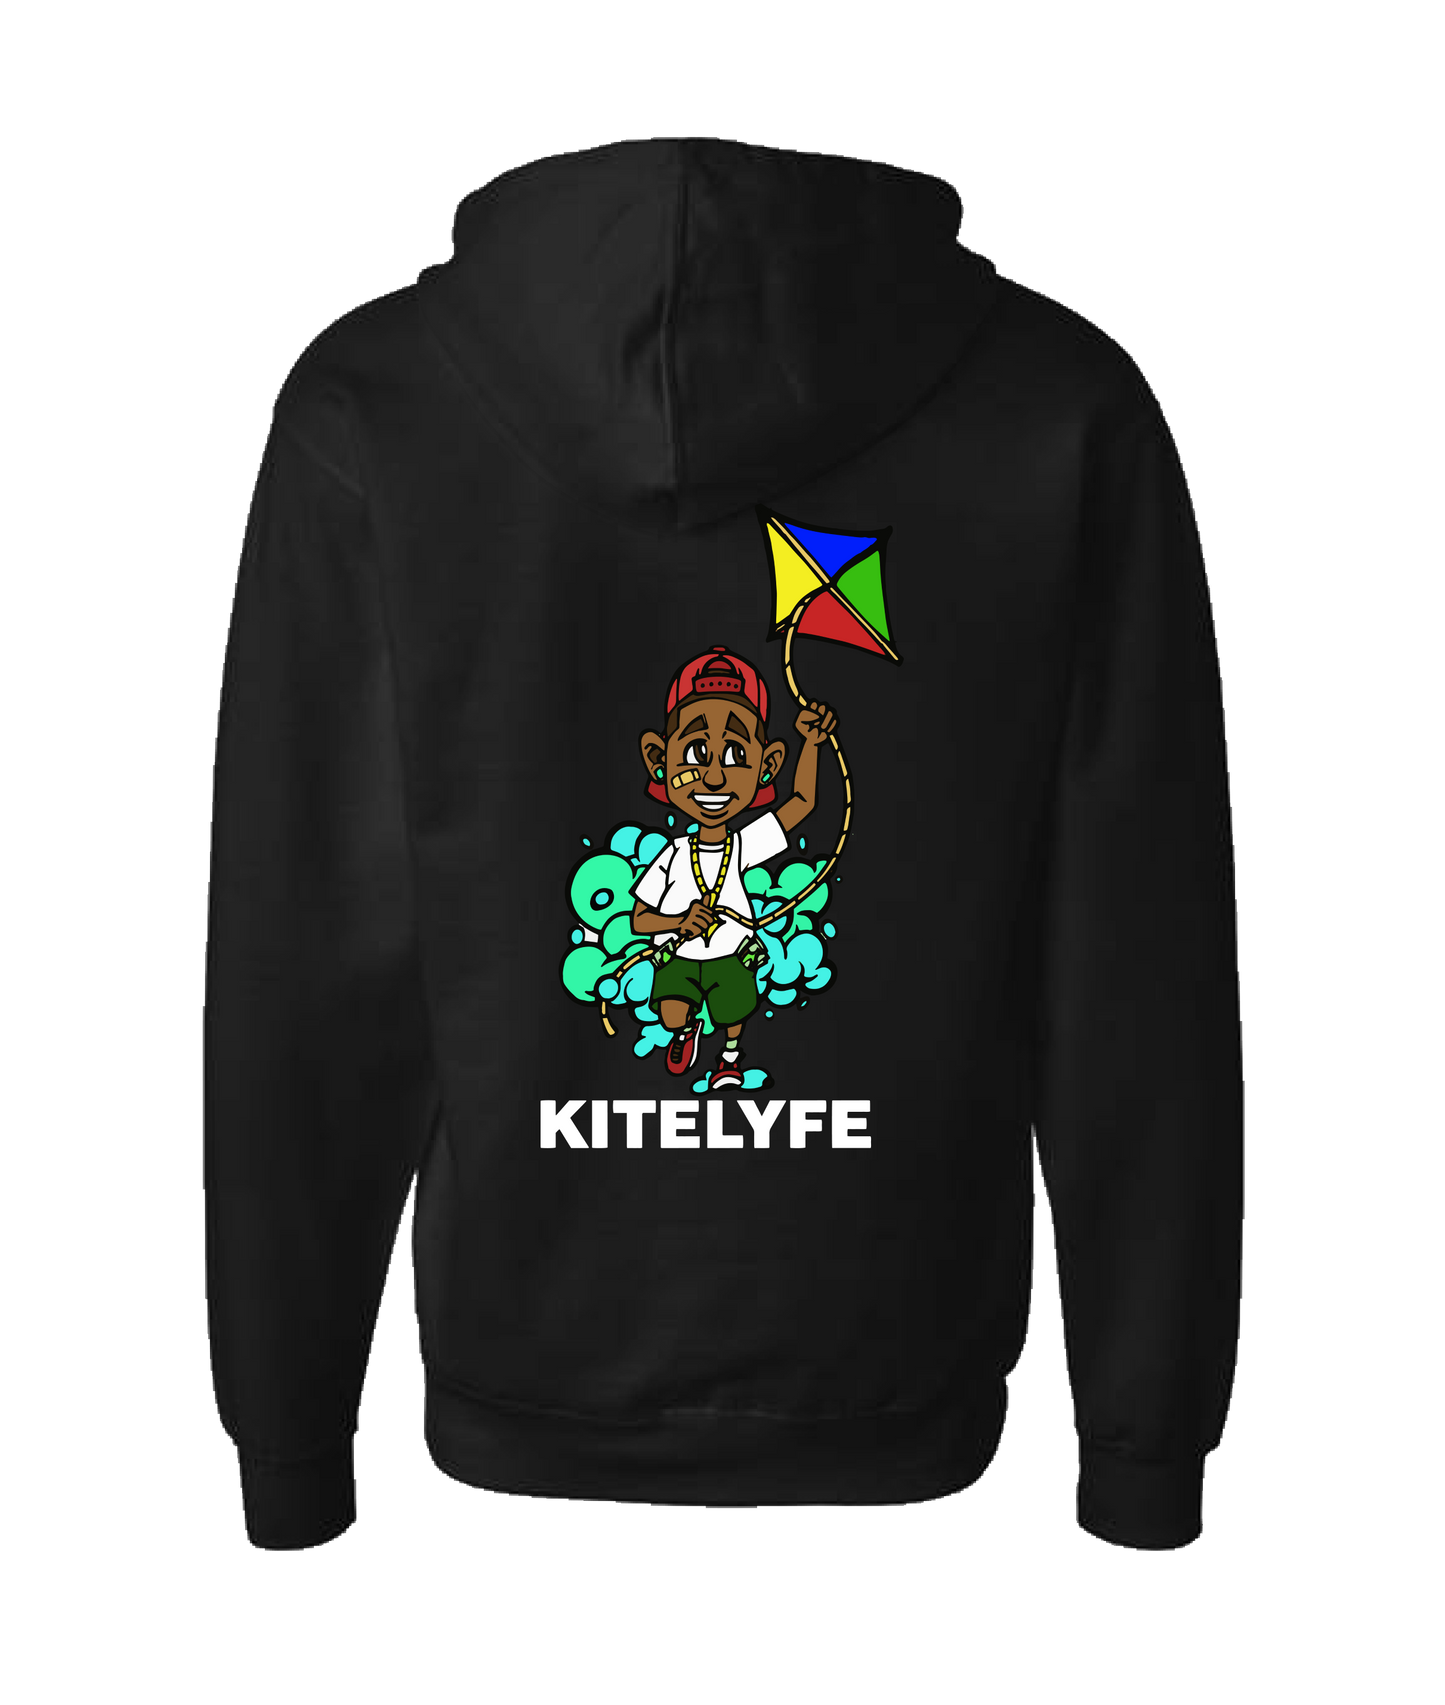 Kitelyfe - KITE - Black Zip Up Hoodie